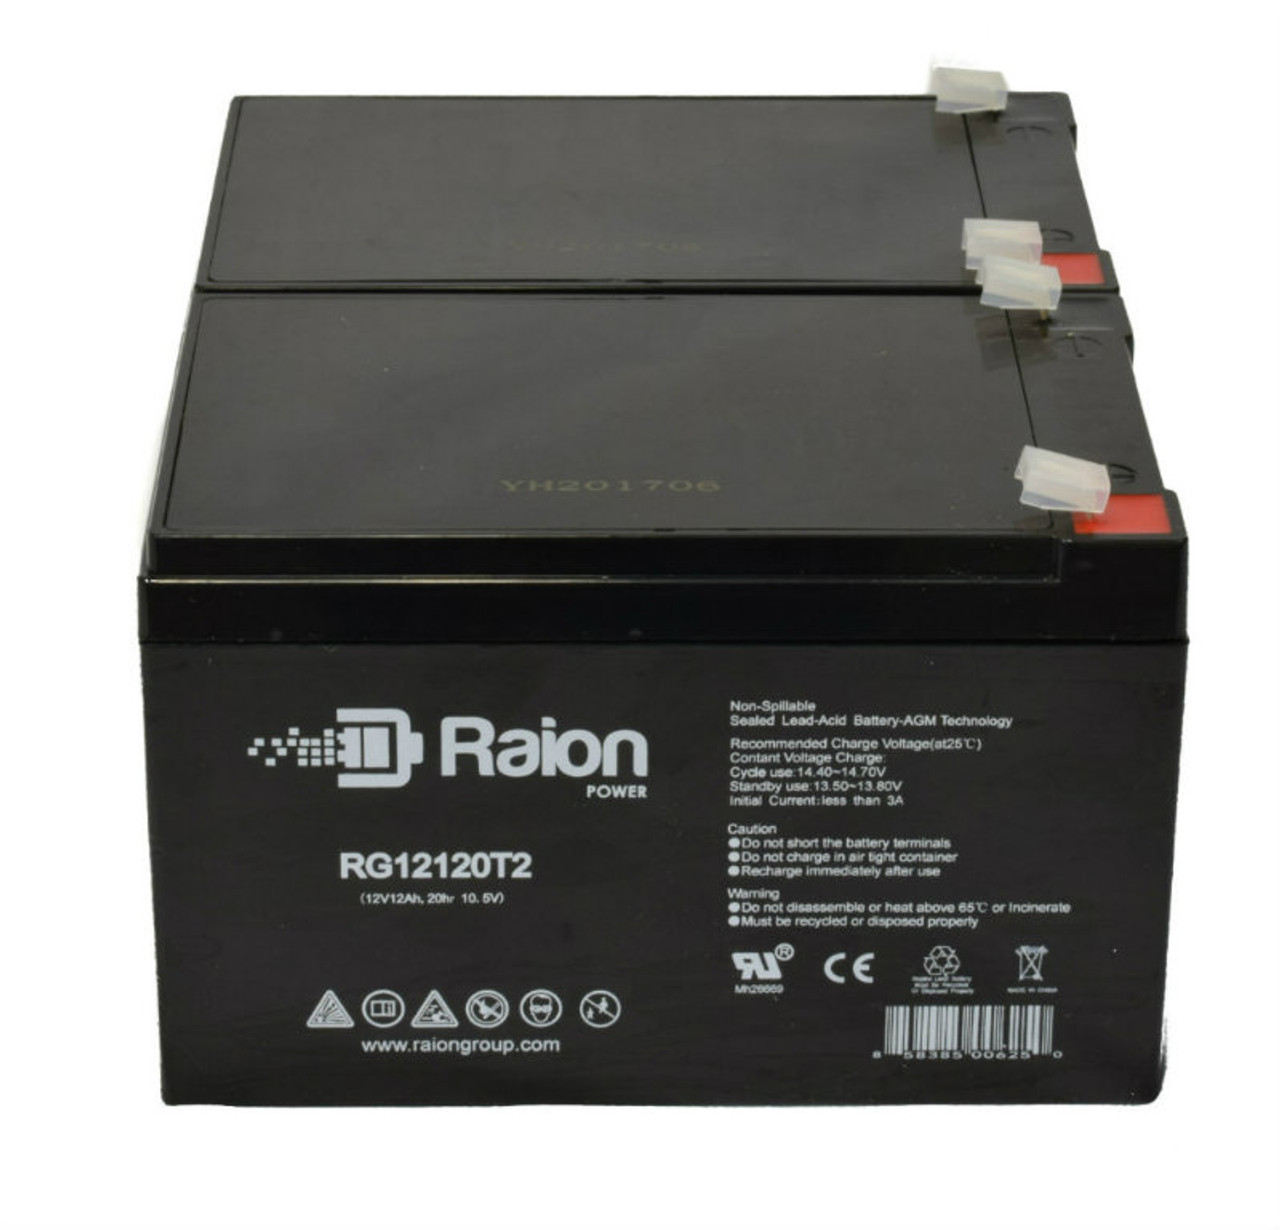 Raion Power 12V 12Ah Non-Spillable Compatible Replacement Battery for Phantom Cables BT-12V-12AF2 - (2 Pack)